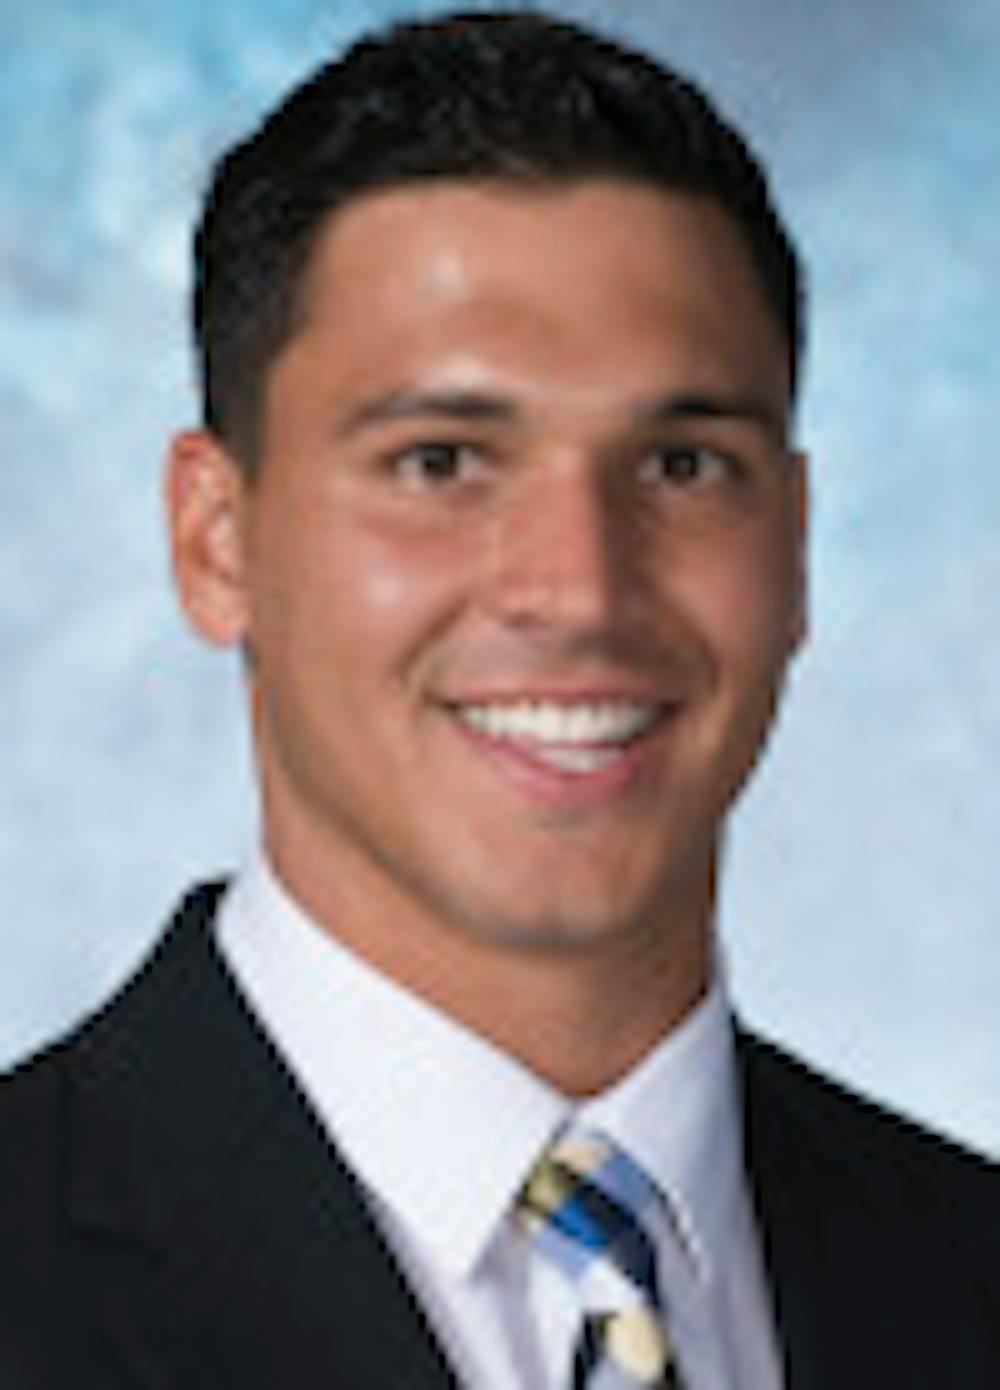 HOPKINSSPORTS.COM
Senior quarterback Jonathan Germano